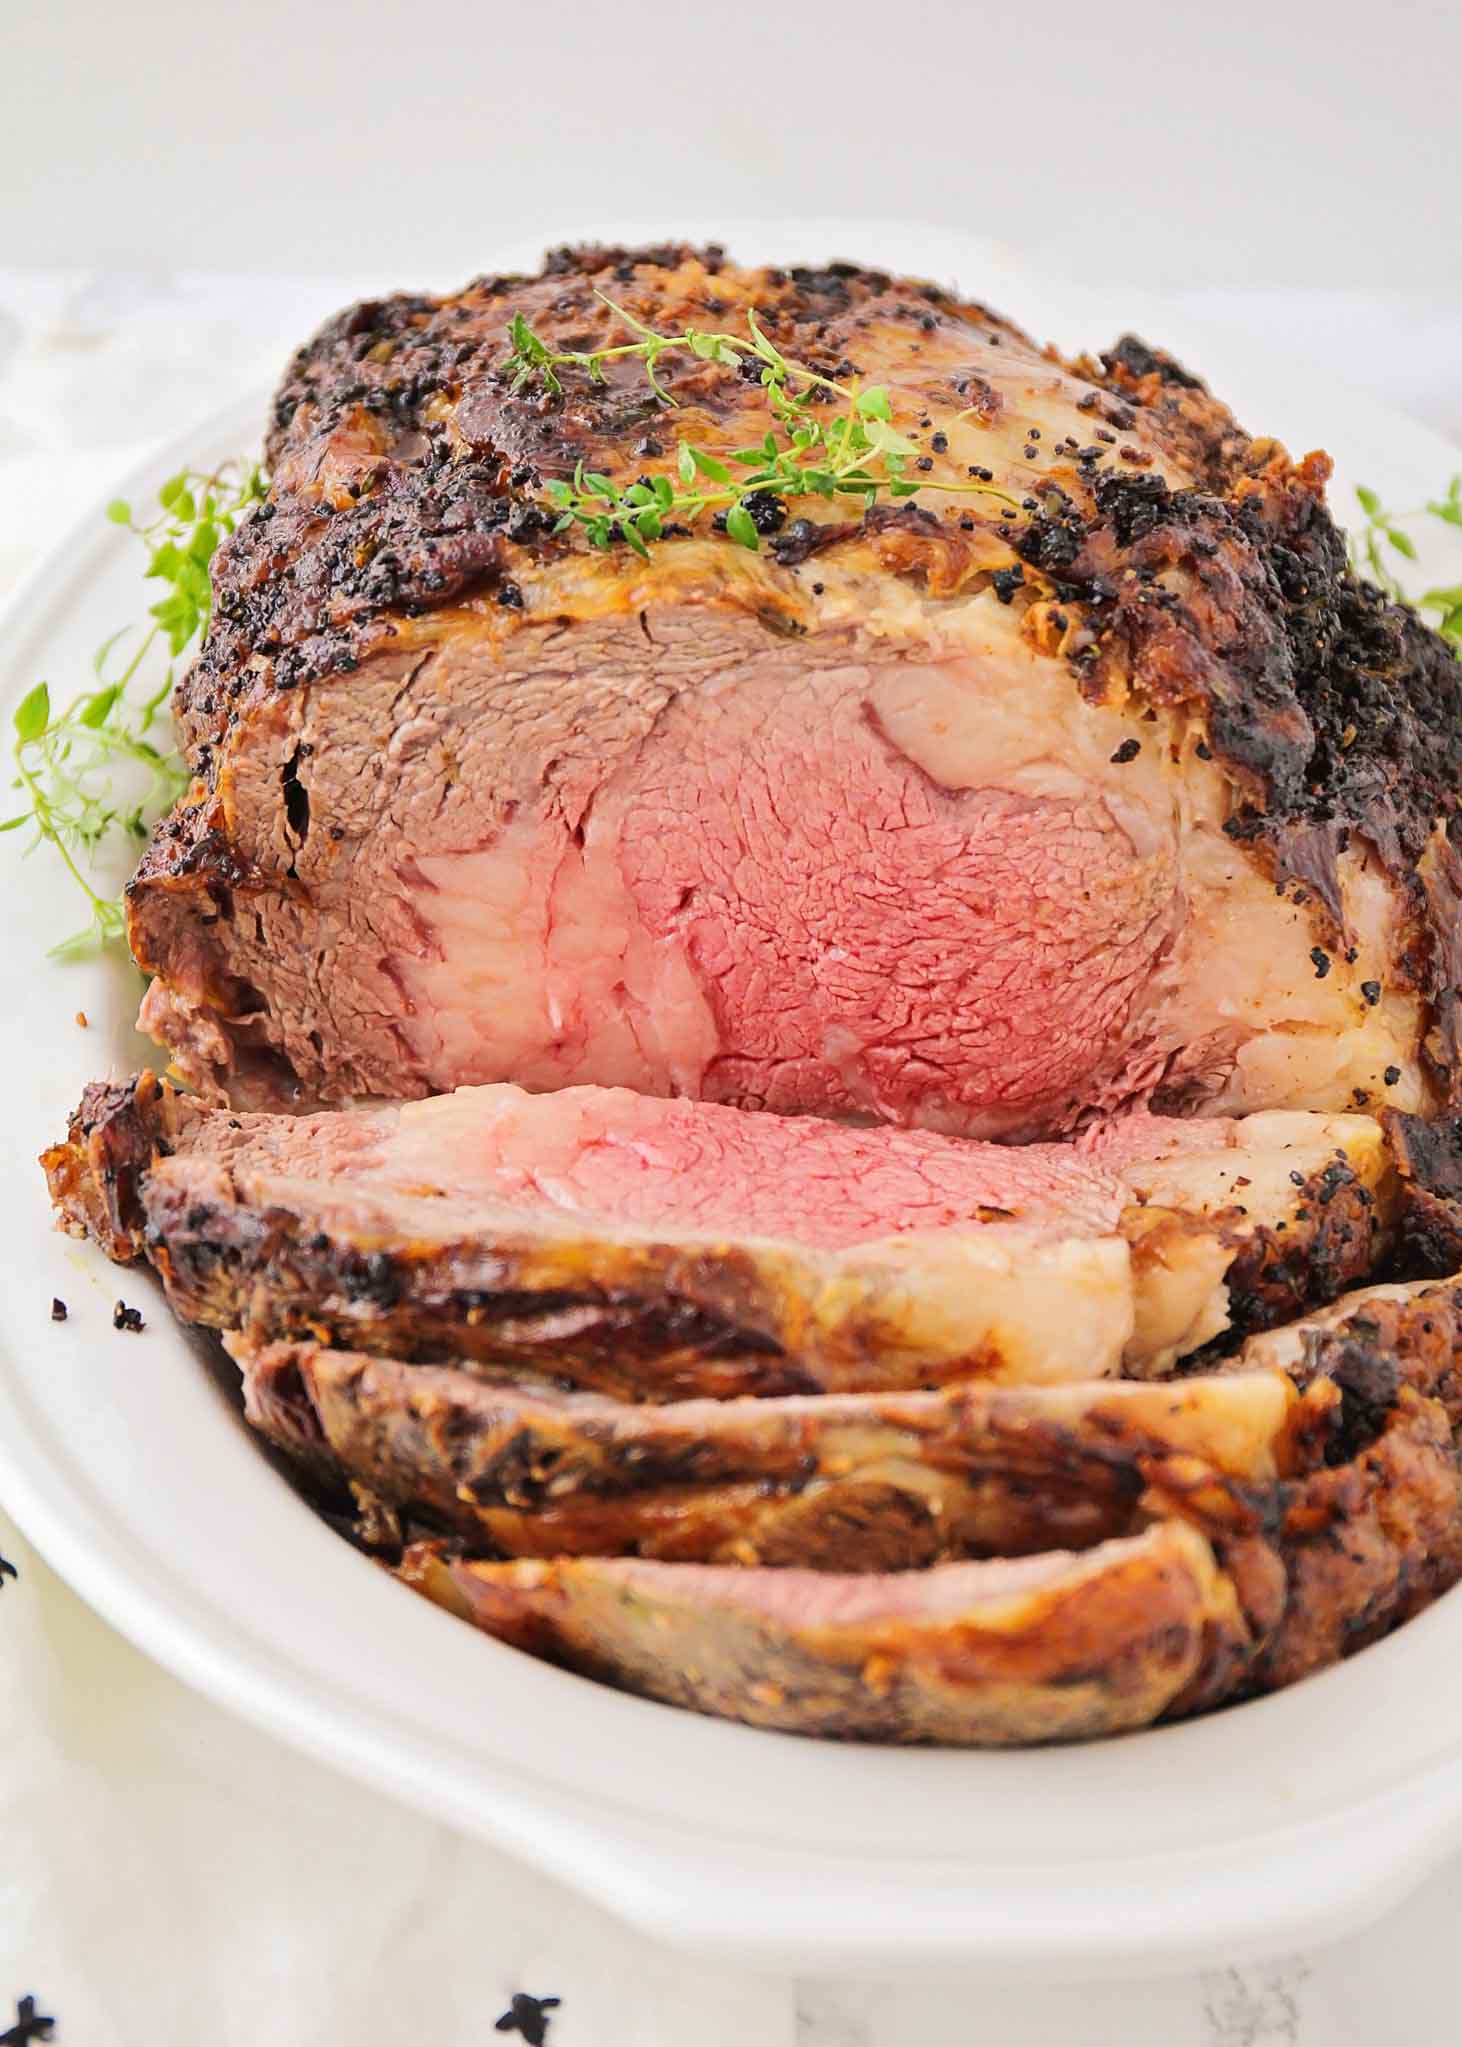 Prime rib roast sliced on a serving platter.